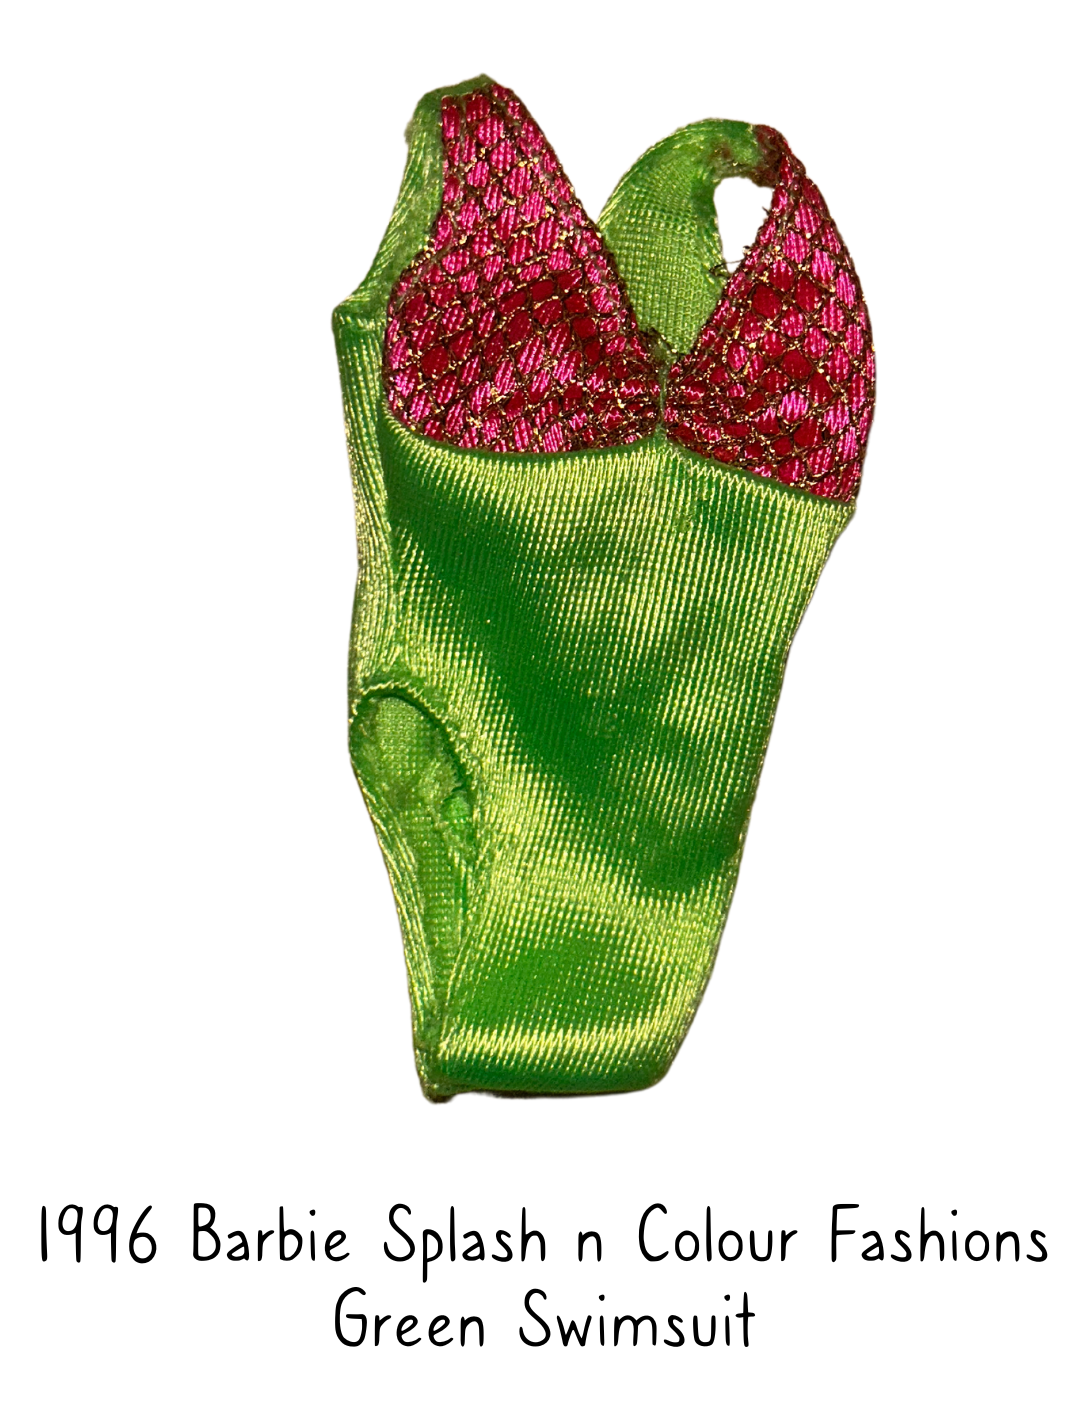 1996 Barbie Splash n Colour Fashions #68620 Gree Swimsuit